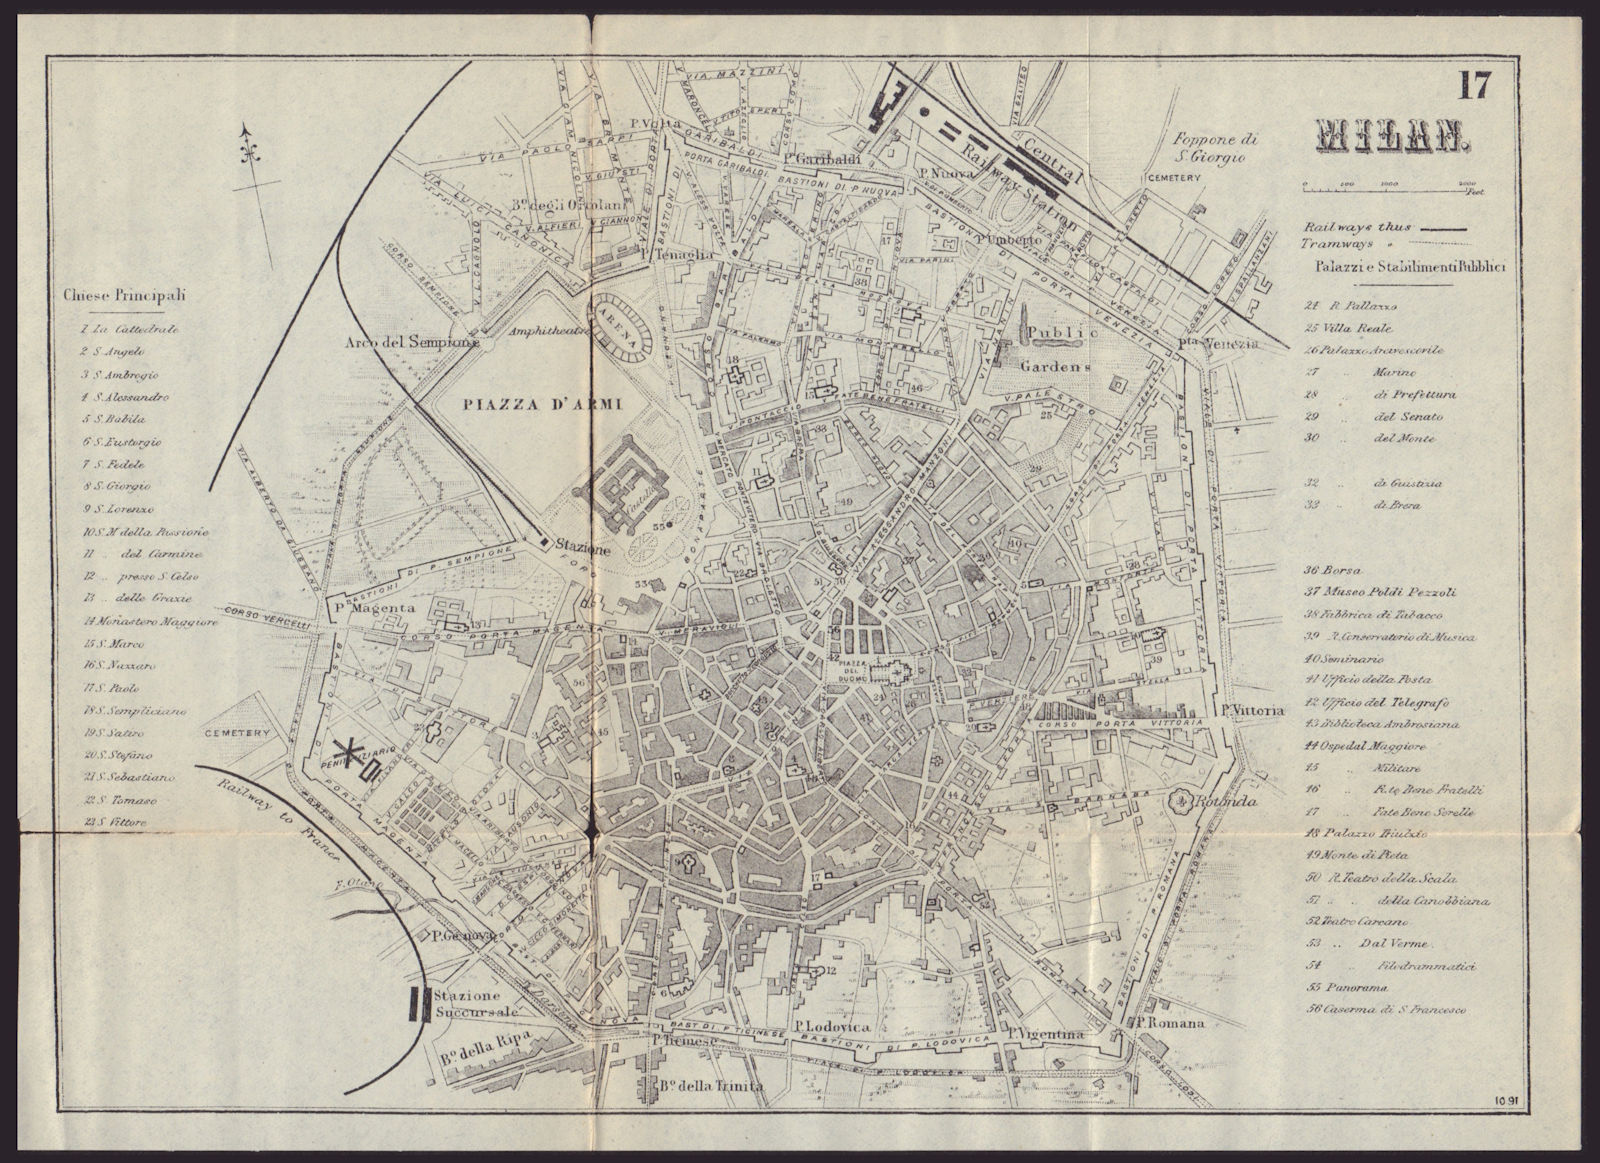 Associate Product MILAN MILANO antique town plan city map. Italy. BRADSHAW 1892 old